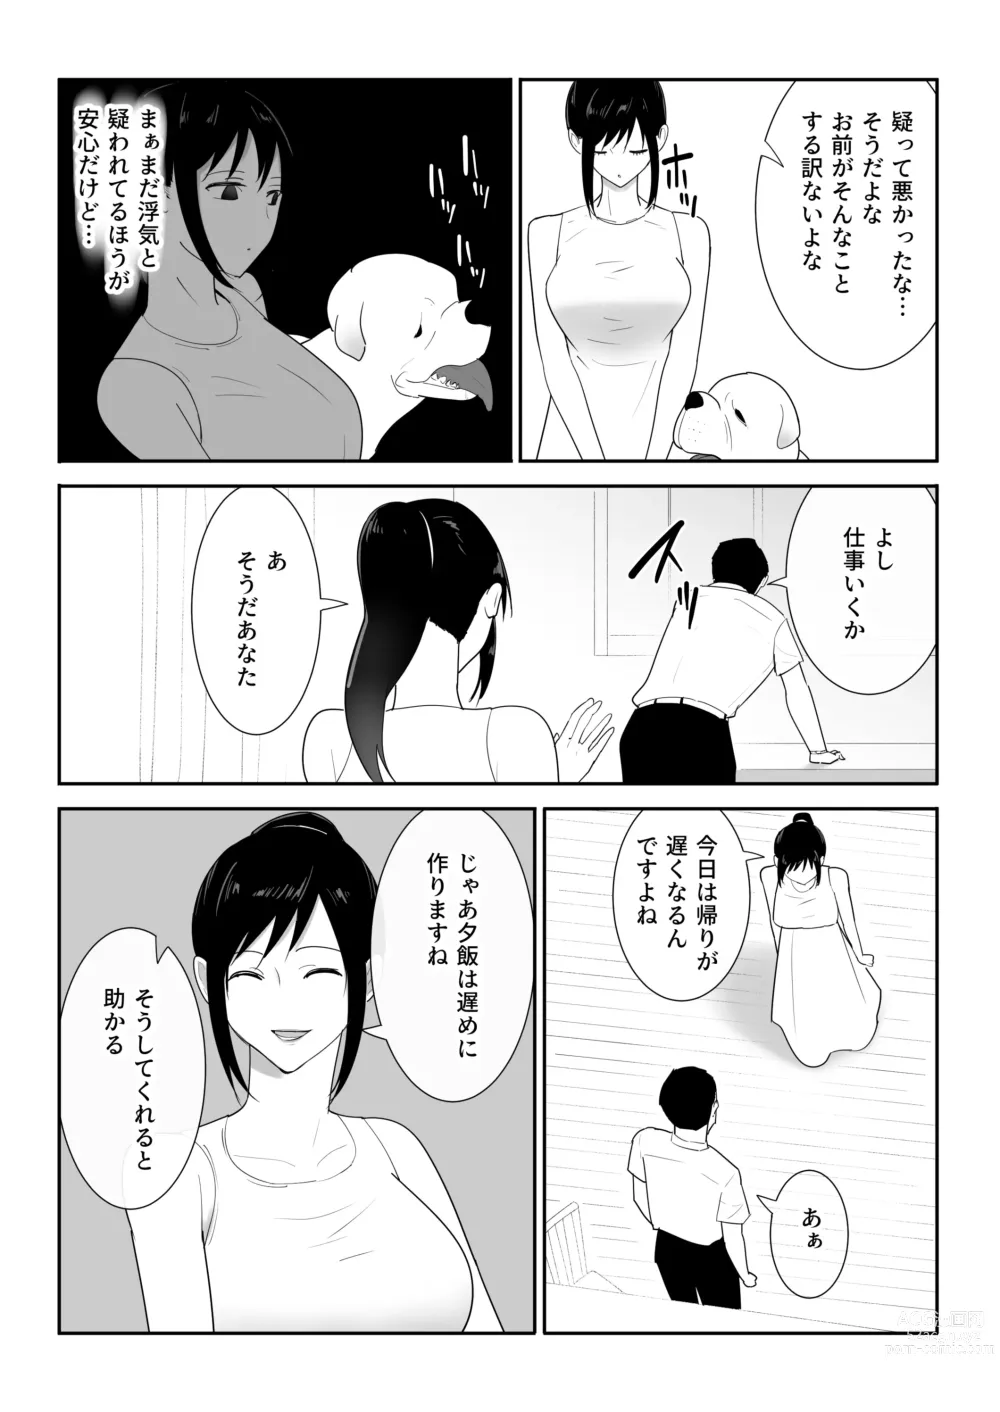 Page 11 of doujinshi Wagaya ni Inu ga Yattekita